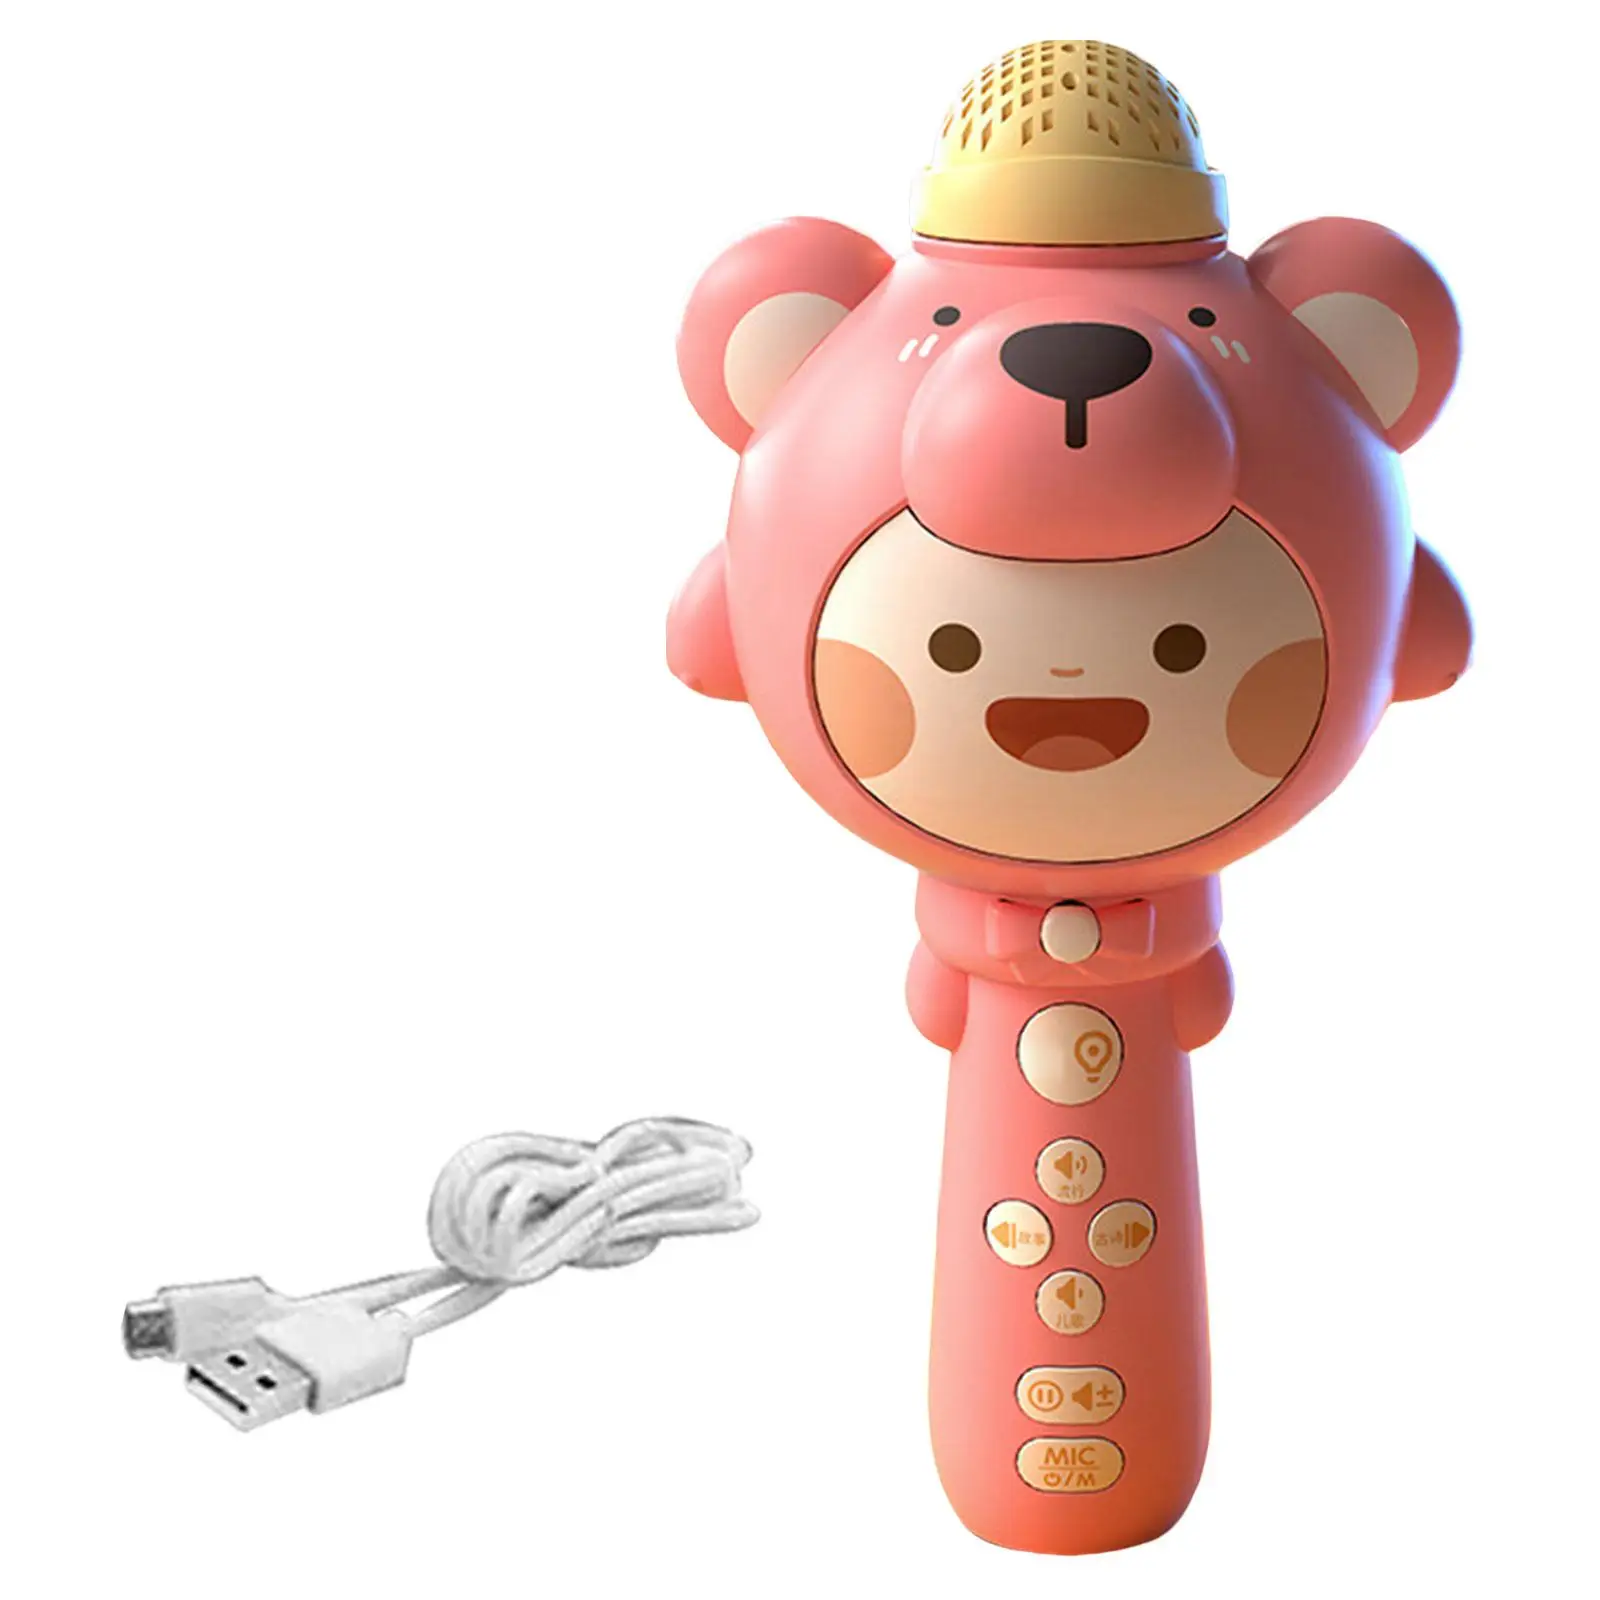 Handheld Mic Speaker Machine Kids Karaoke Microphone Machine Toy Bluetooth Microphone for Adults Children Home KTV Party